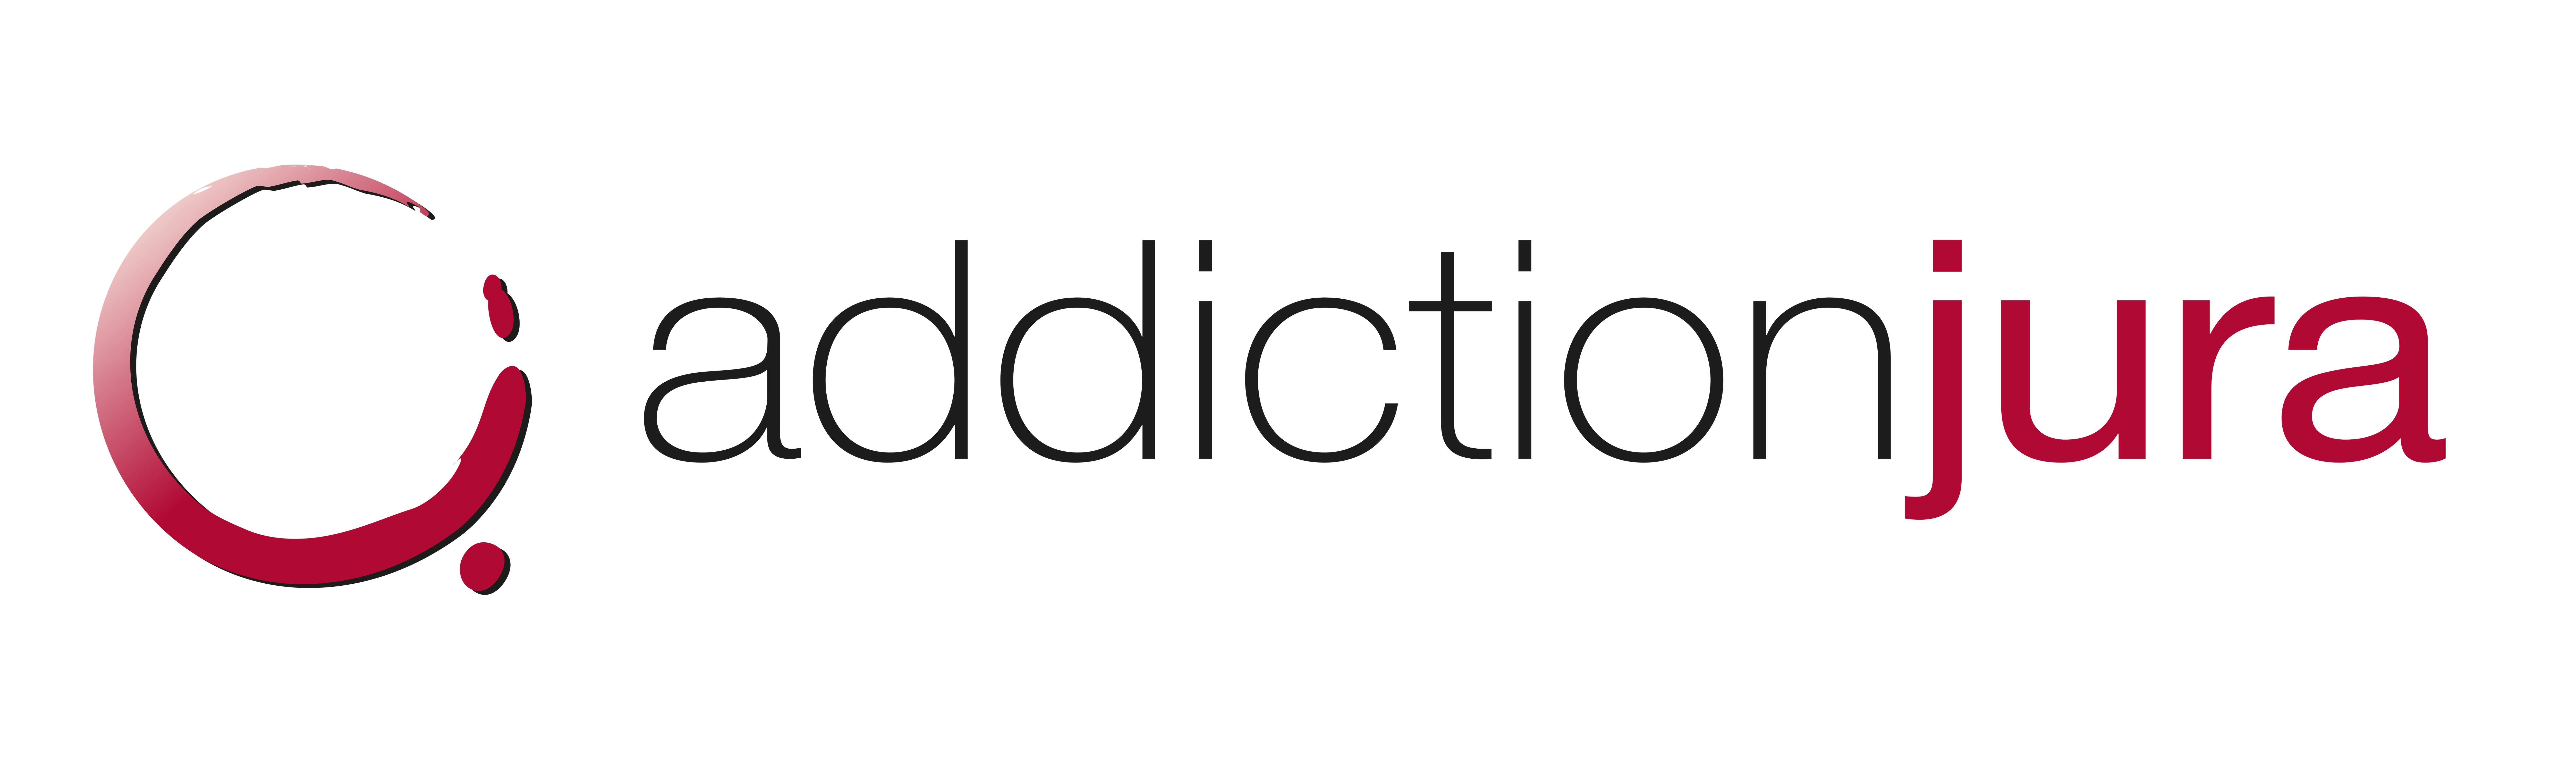 Addiction Jura_logo Ligne Fondation O2